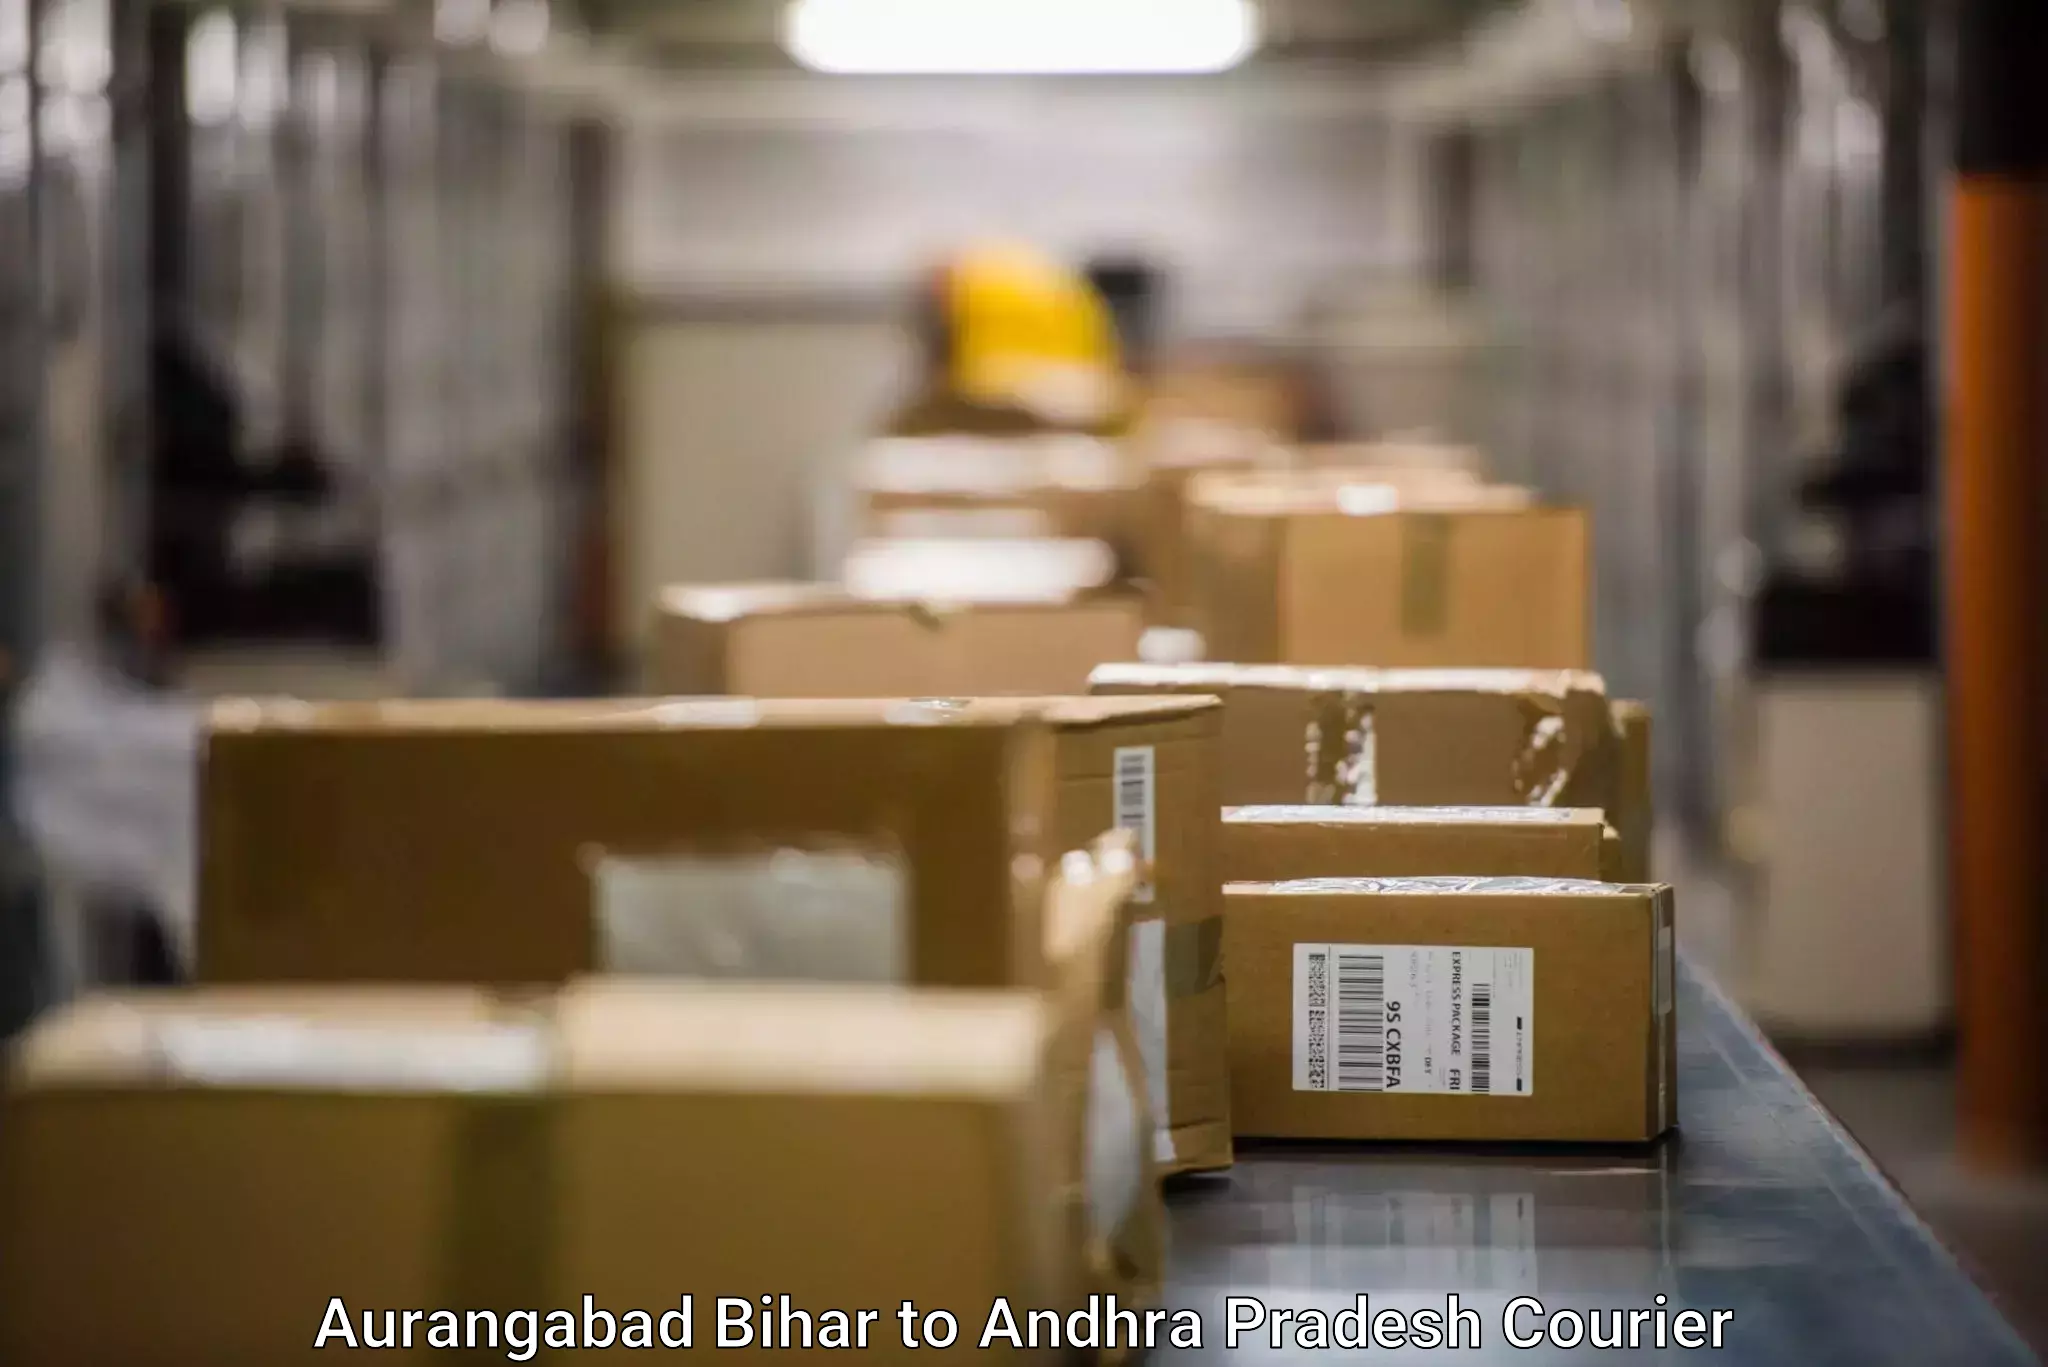 Next-day delivery options Aurangabad Bihar to Andhra Pradesh